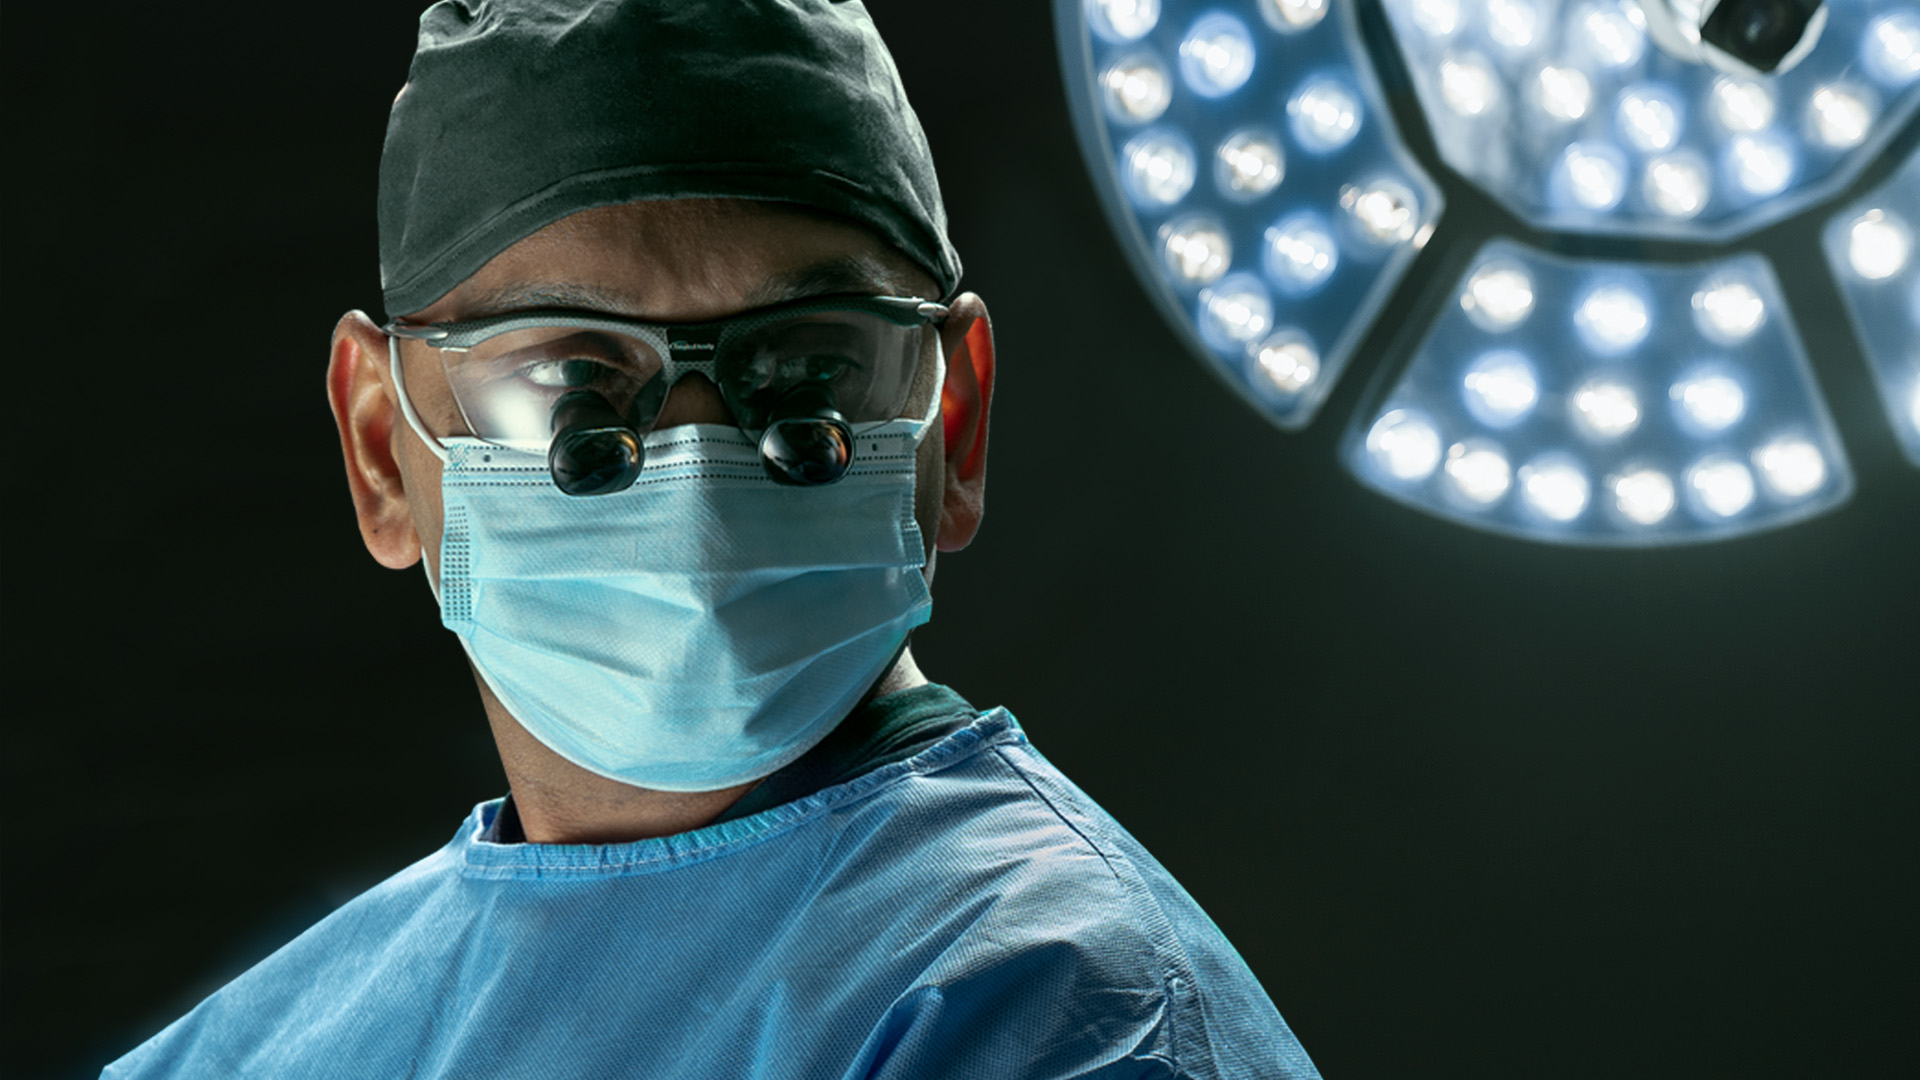 da vinci robotic surgery singapore